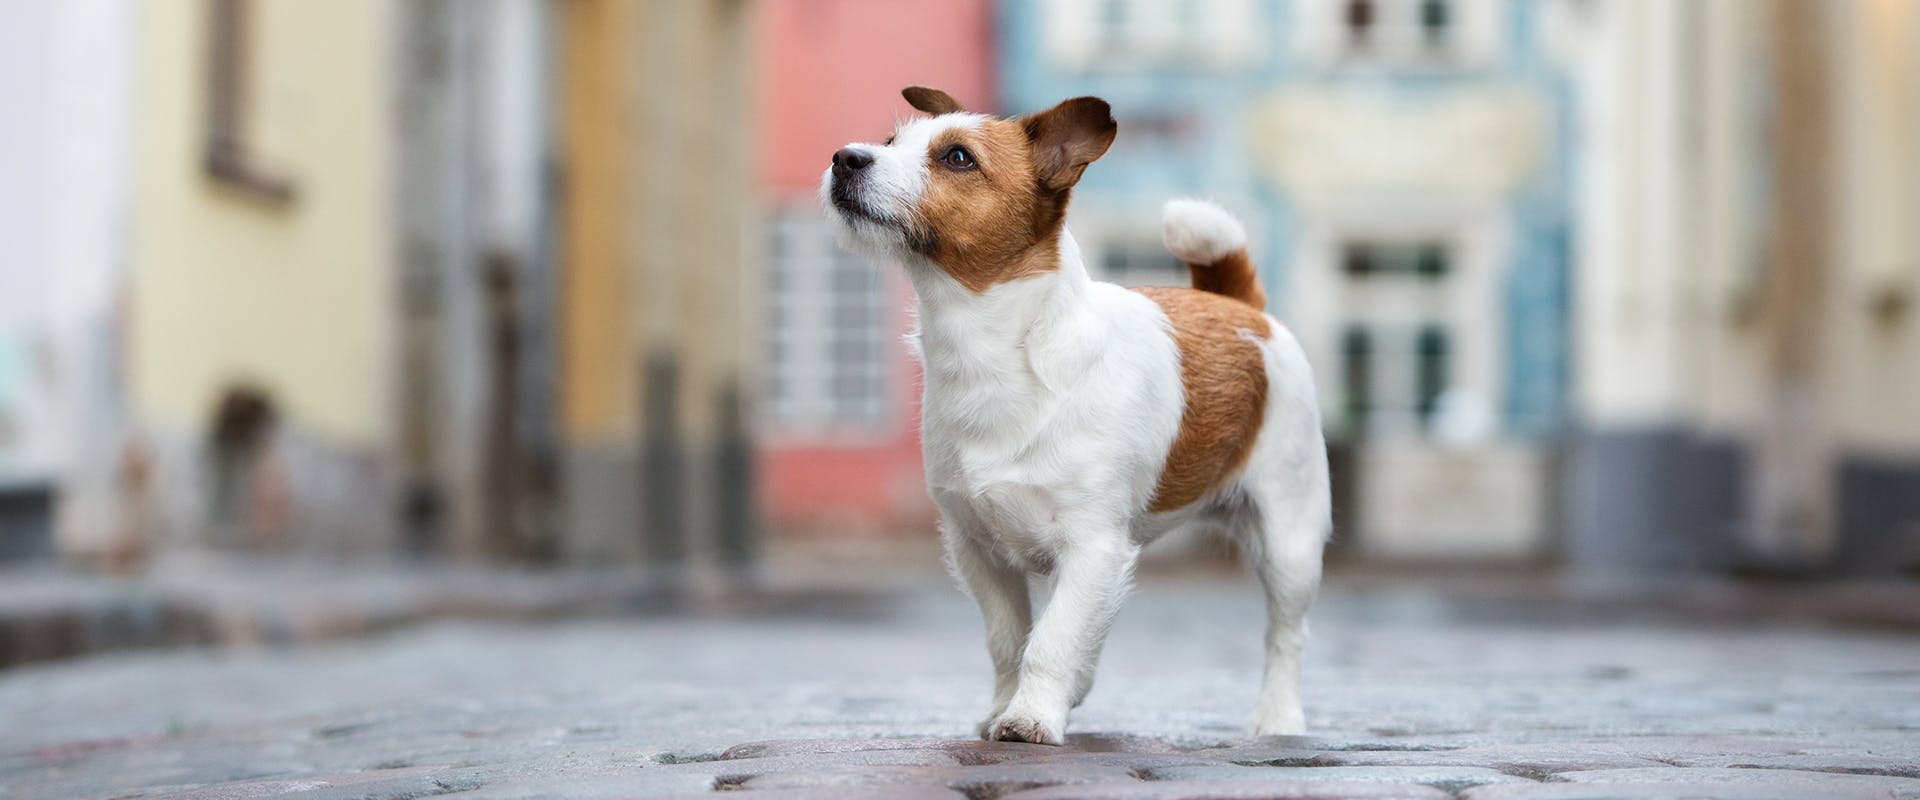 A cute Jack Russell puppy walking through a street